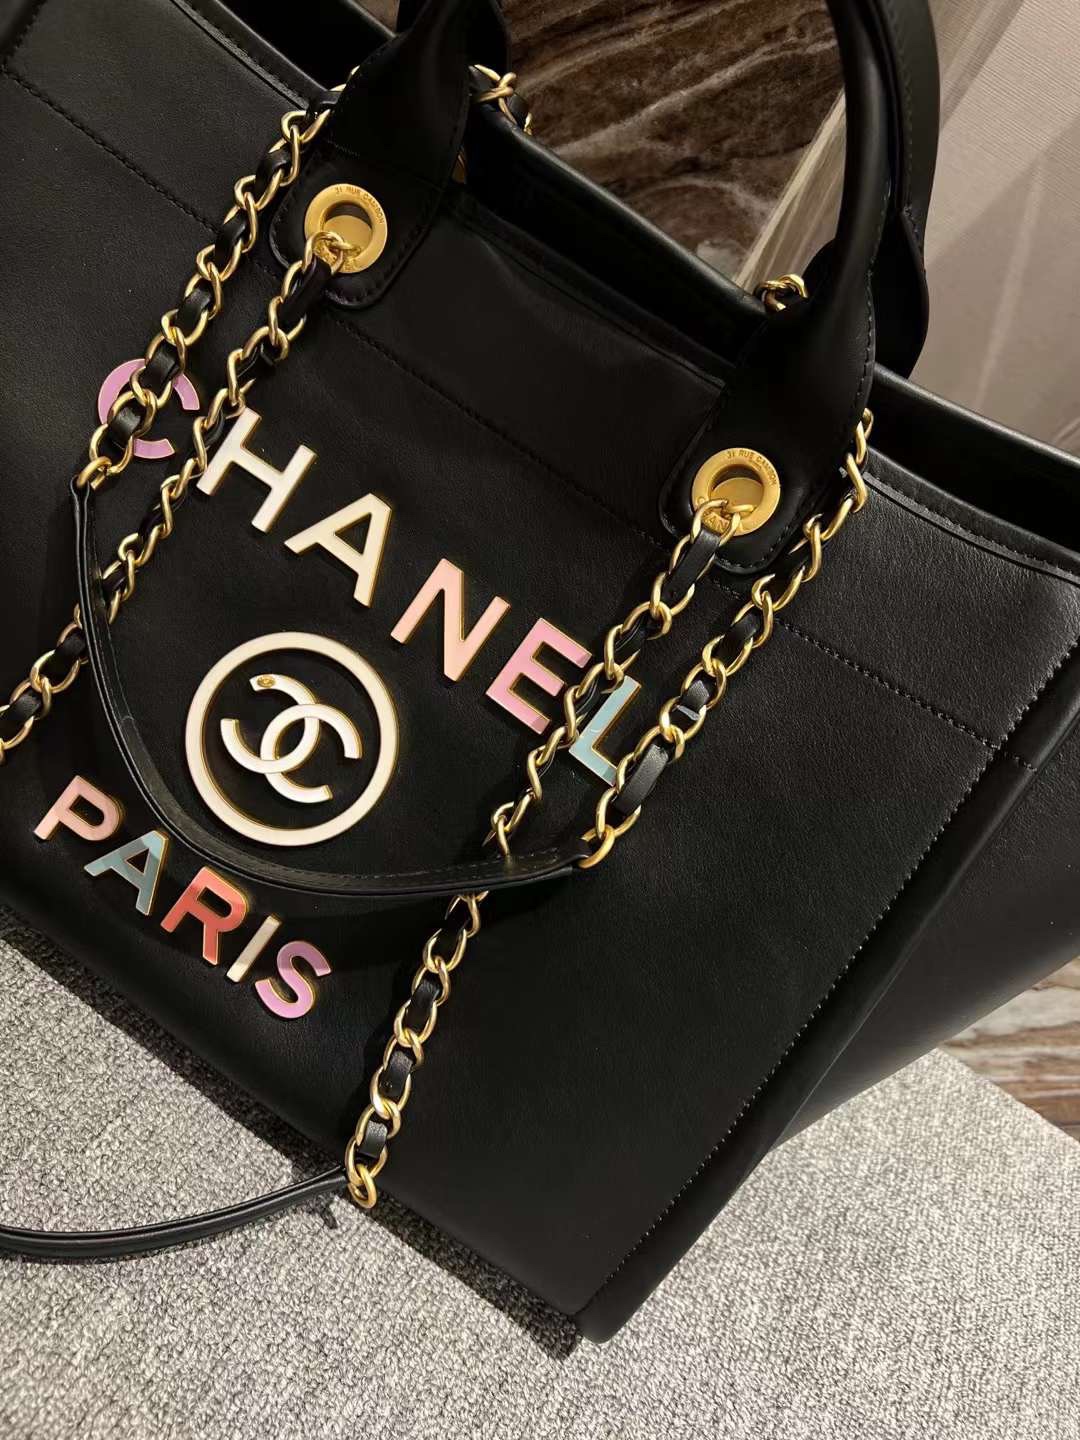 【P1880】Chanel包包价格  香奈儿22年新款彩色字母logo真皮沙滩包度假包